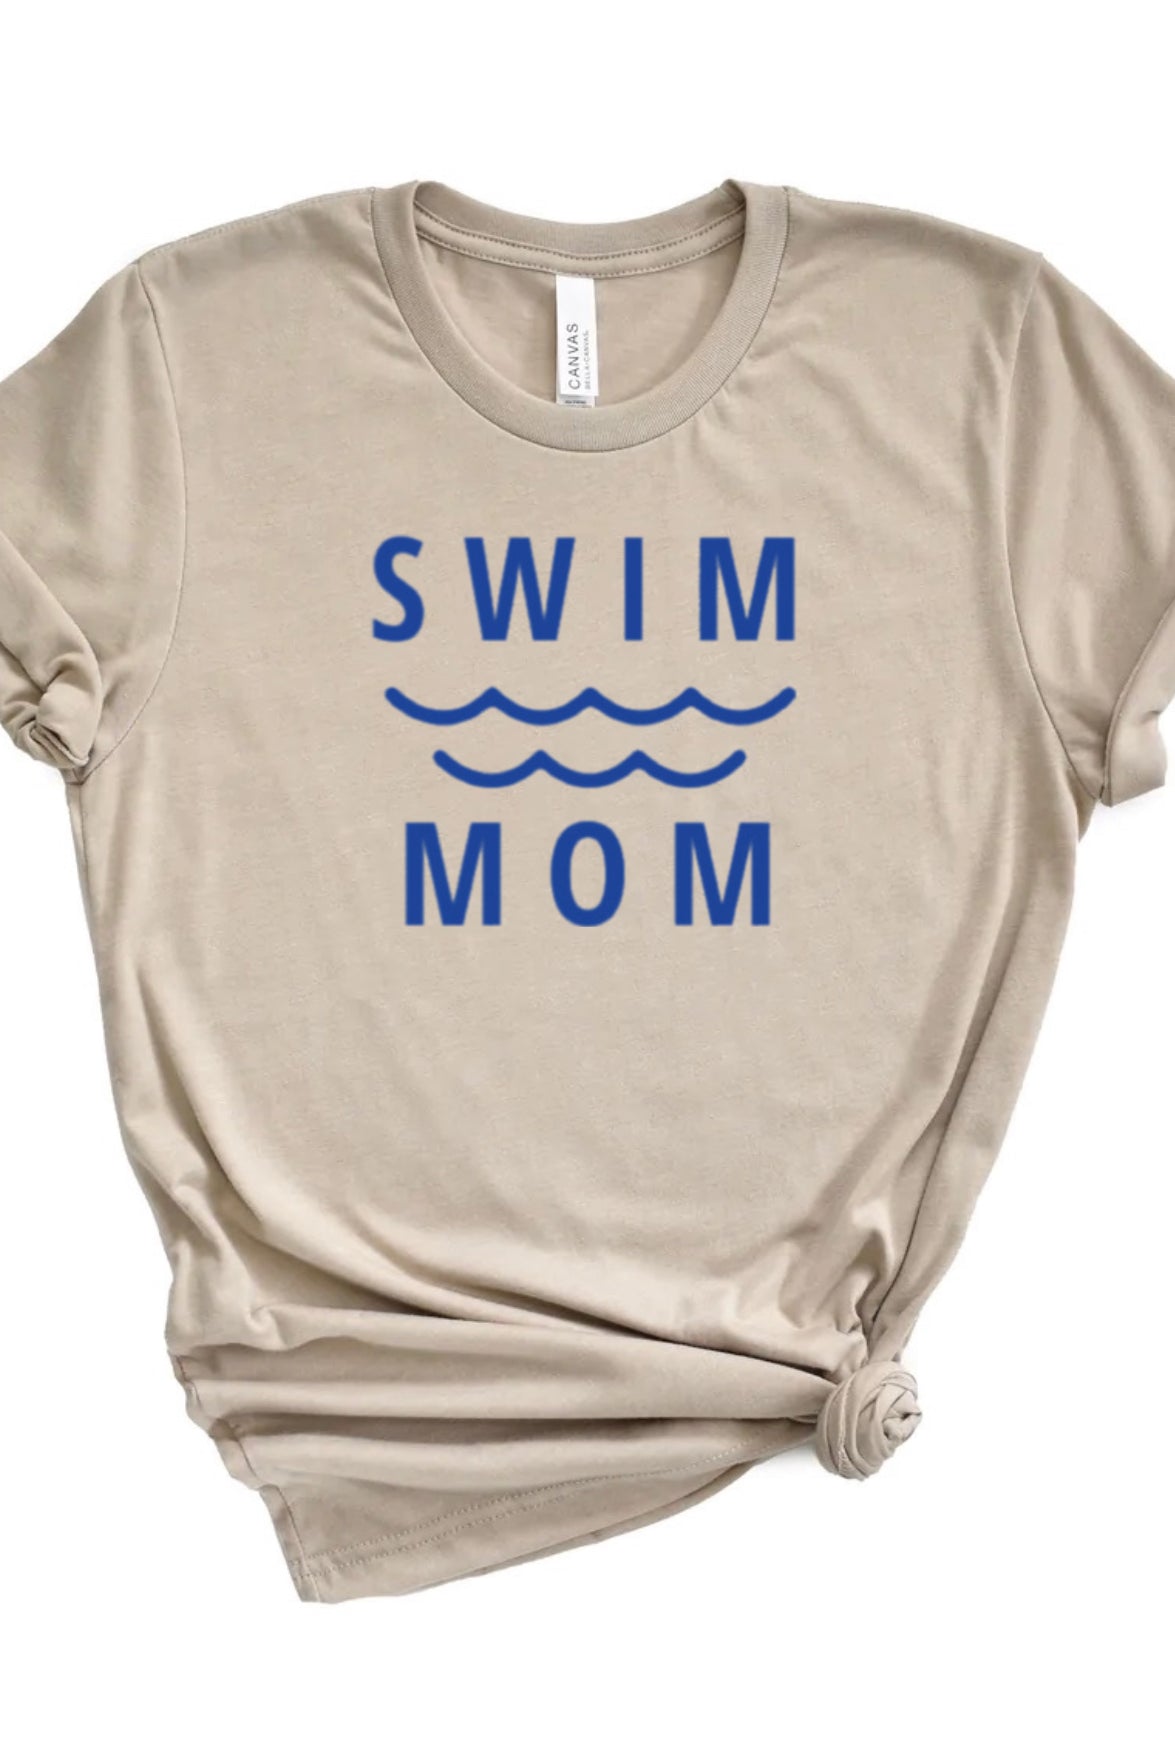 Swim mom shirt, Swim mom life, Swim tee, swim shirt, swim team shirt